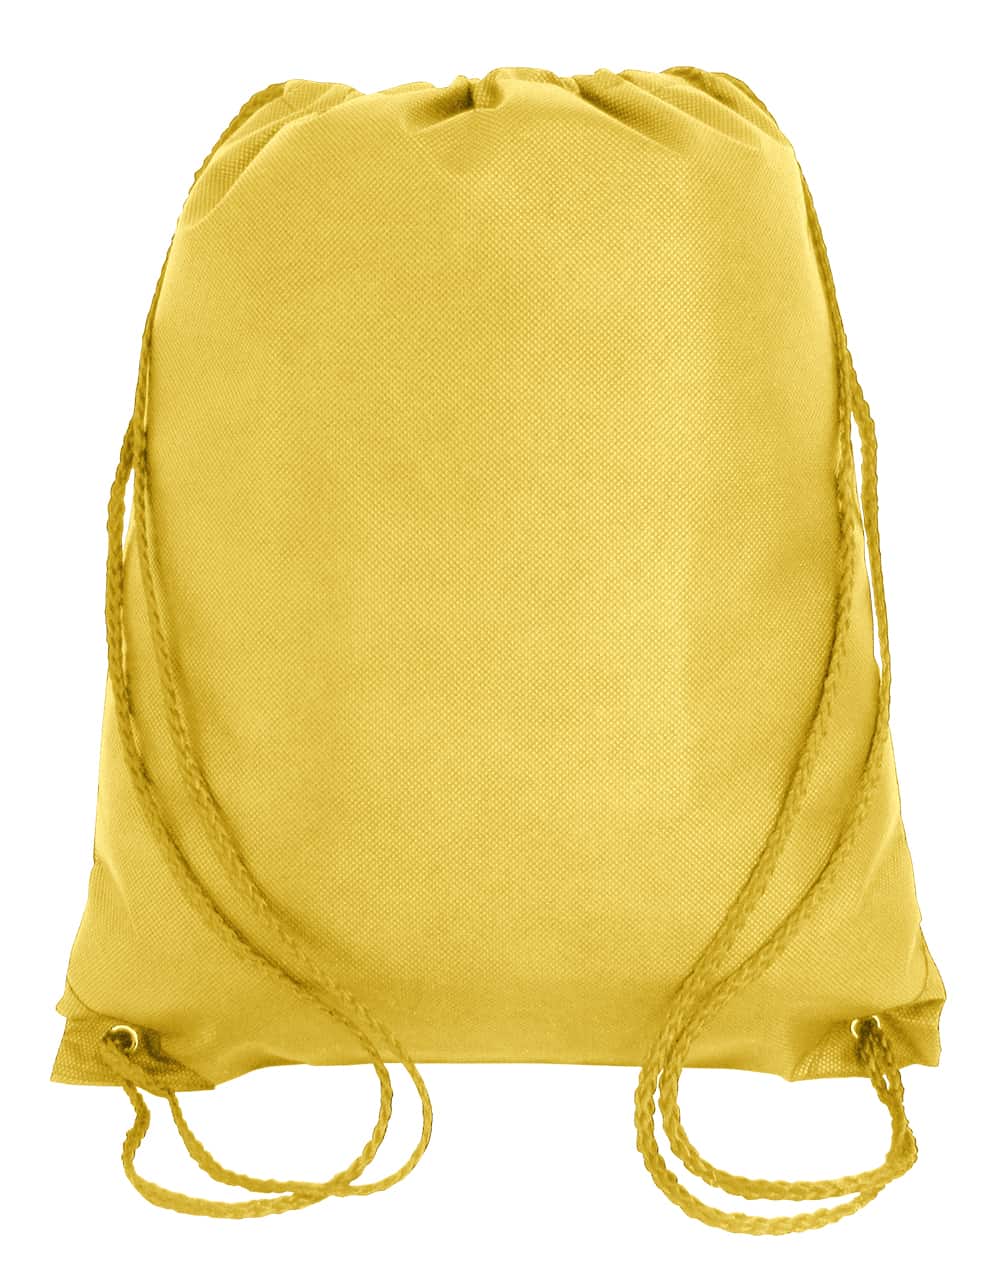 Budget Drawstring Bag Small Size yellow